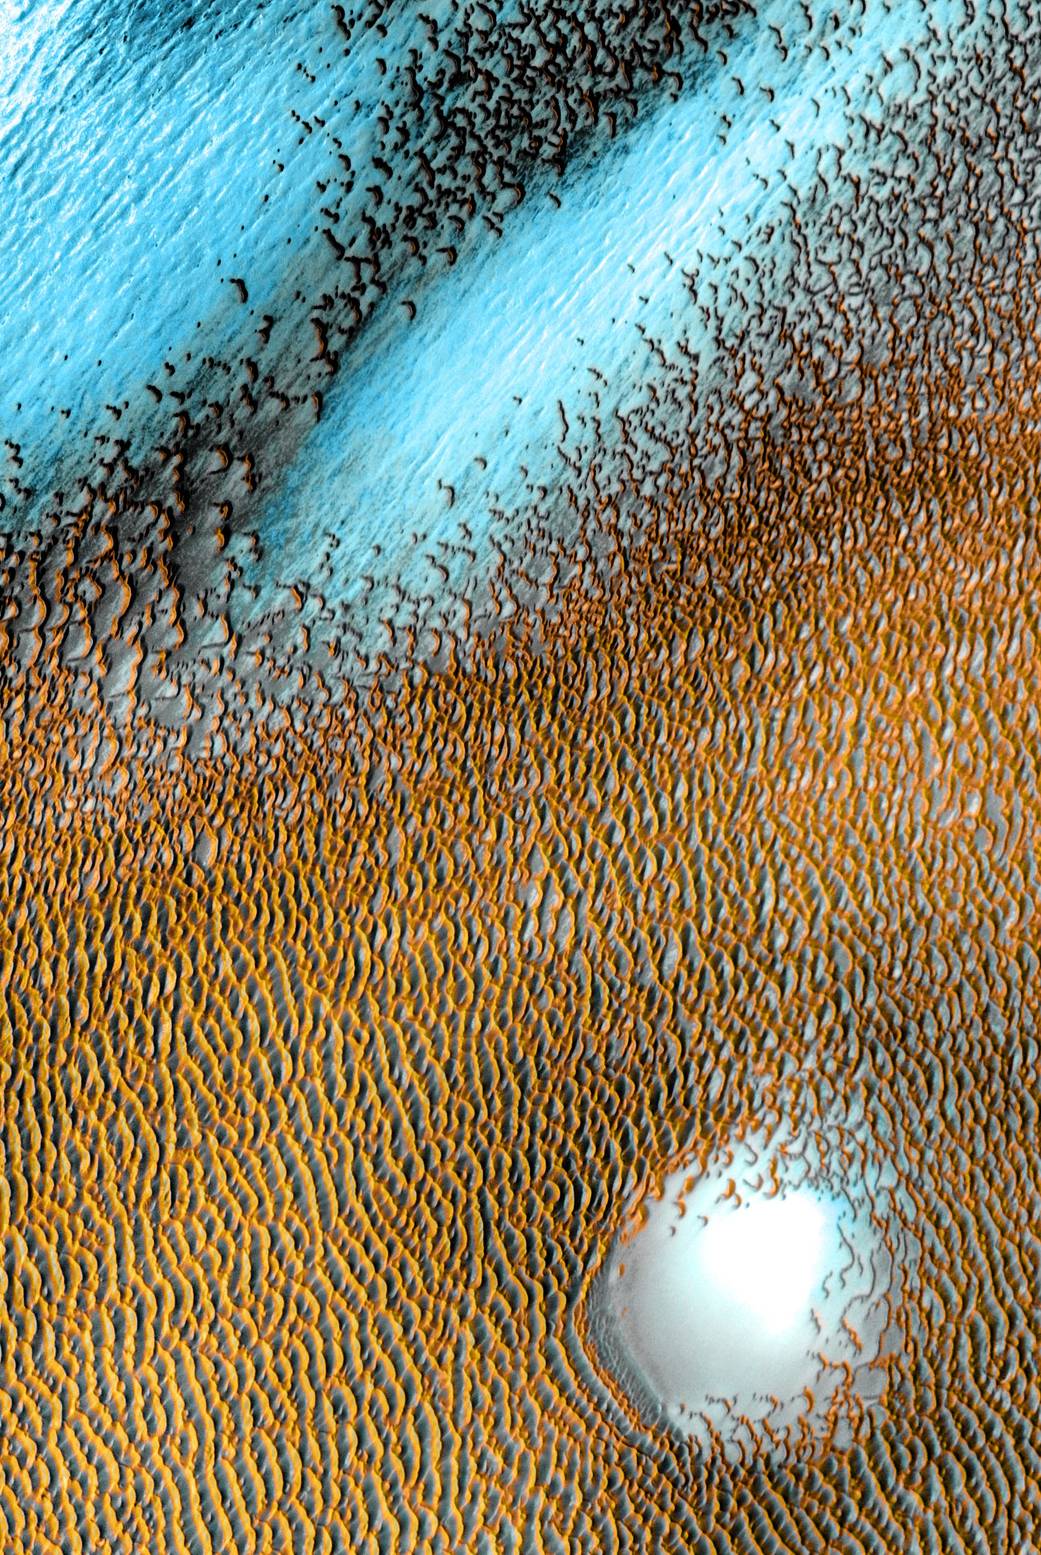 Mars' polar dunes